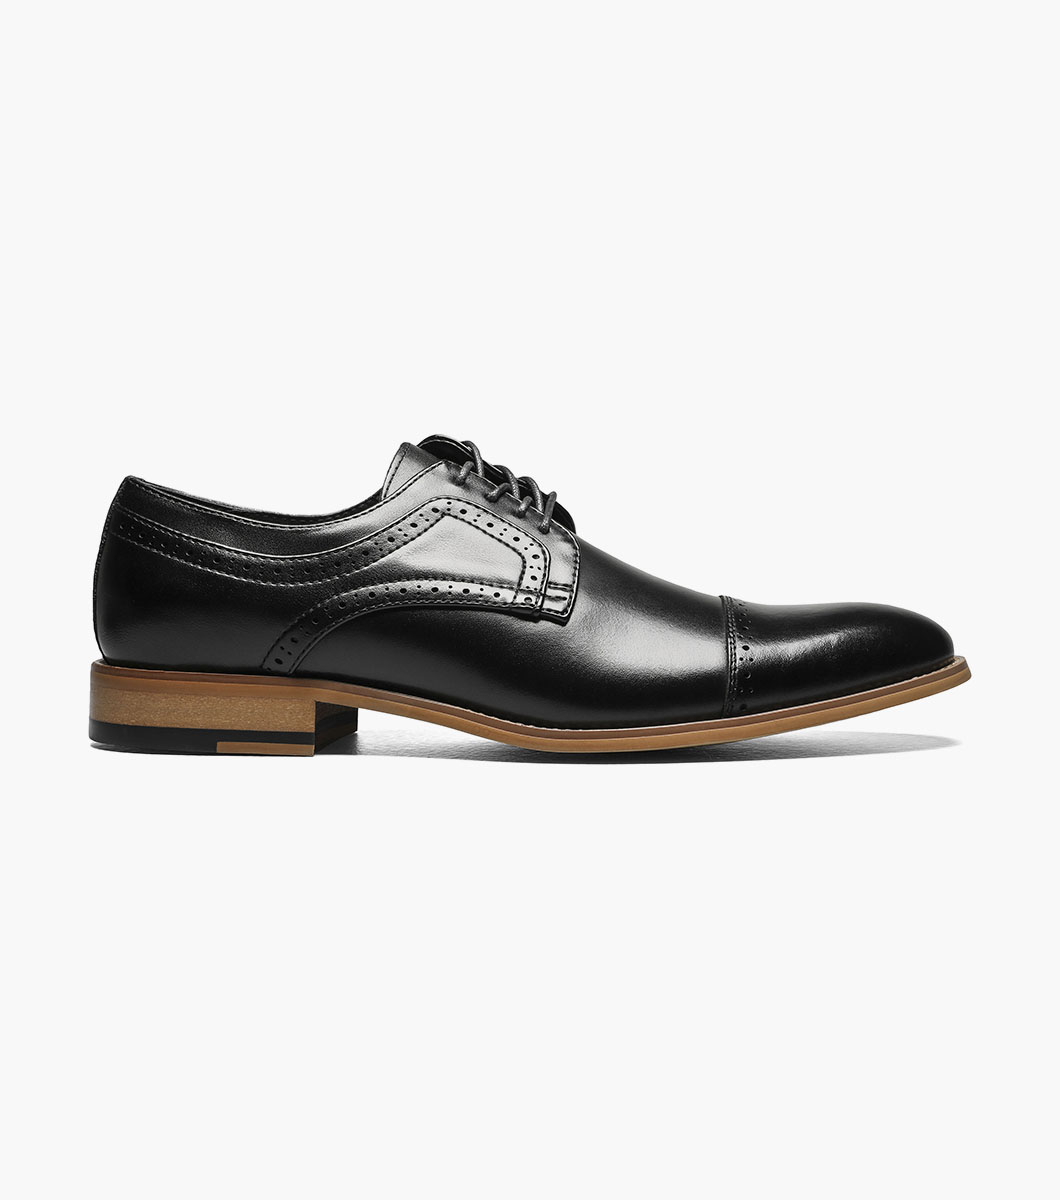 Dickinson Cap Toe Oxford Men’s Dress Shoes | Stacyadams.com